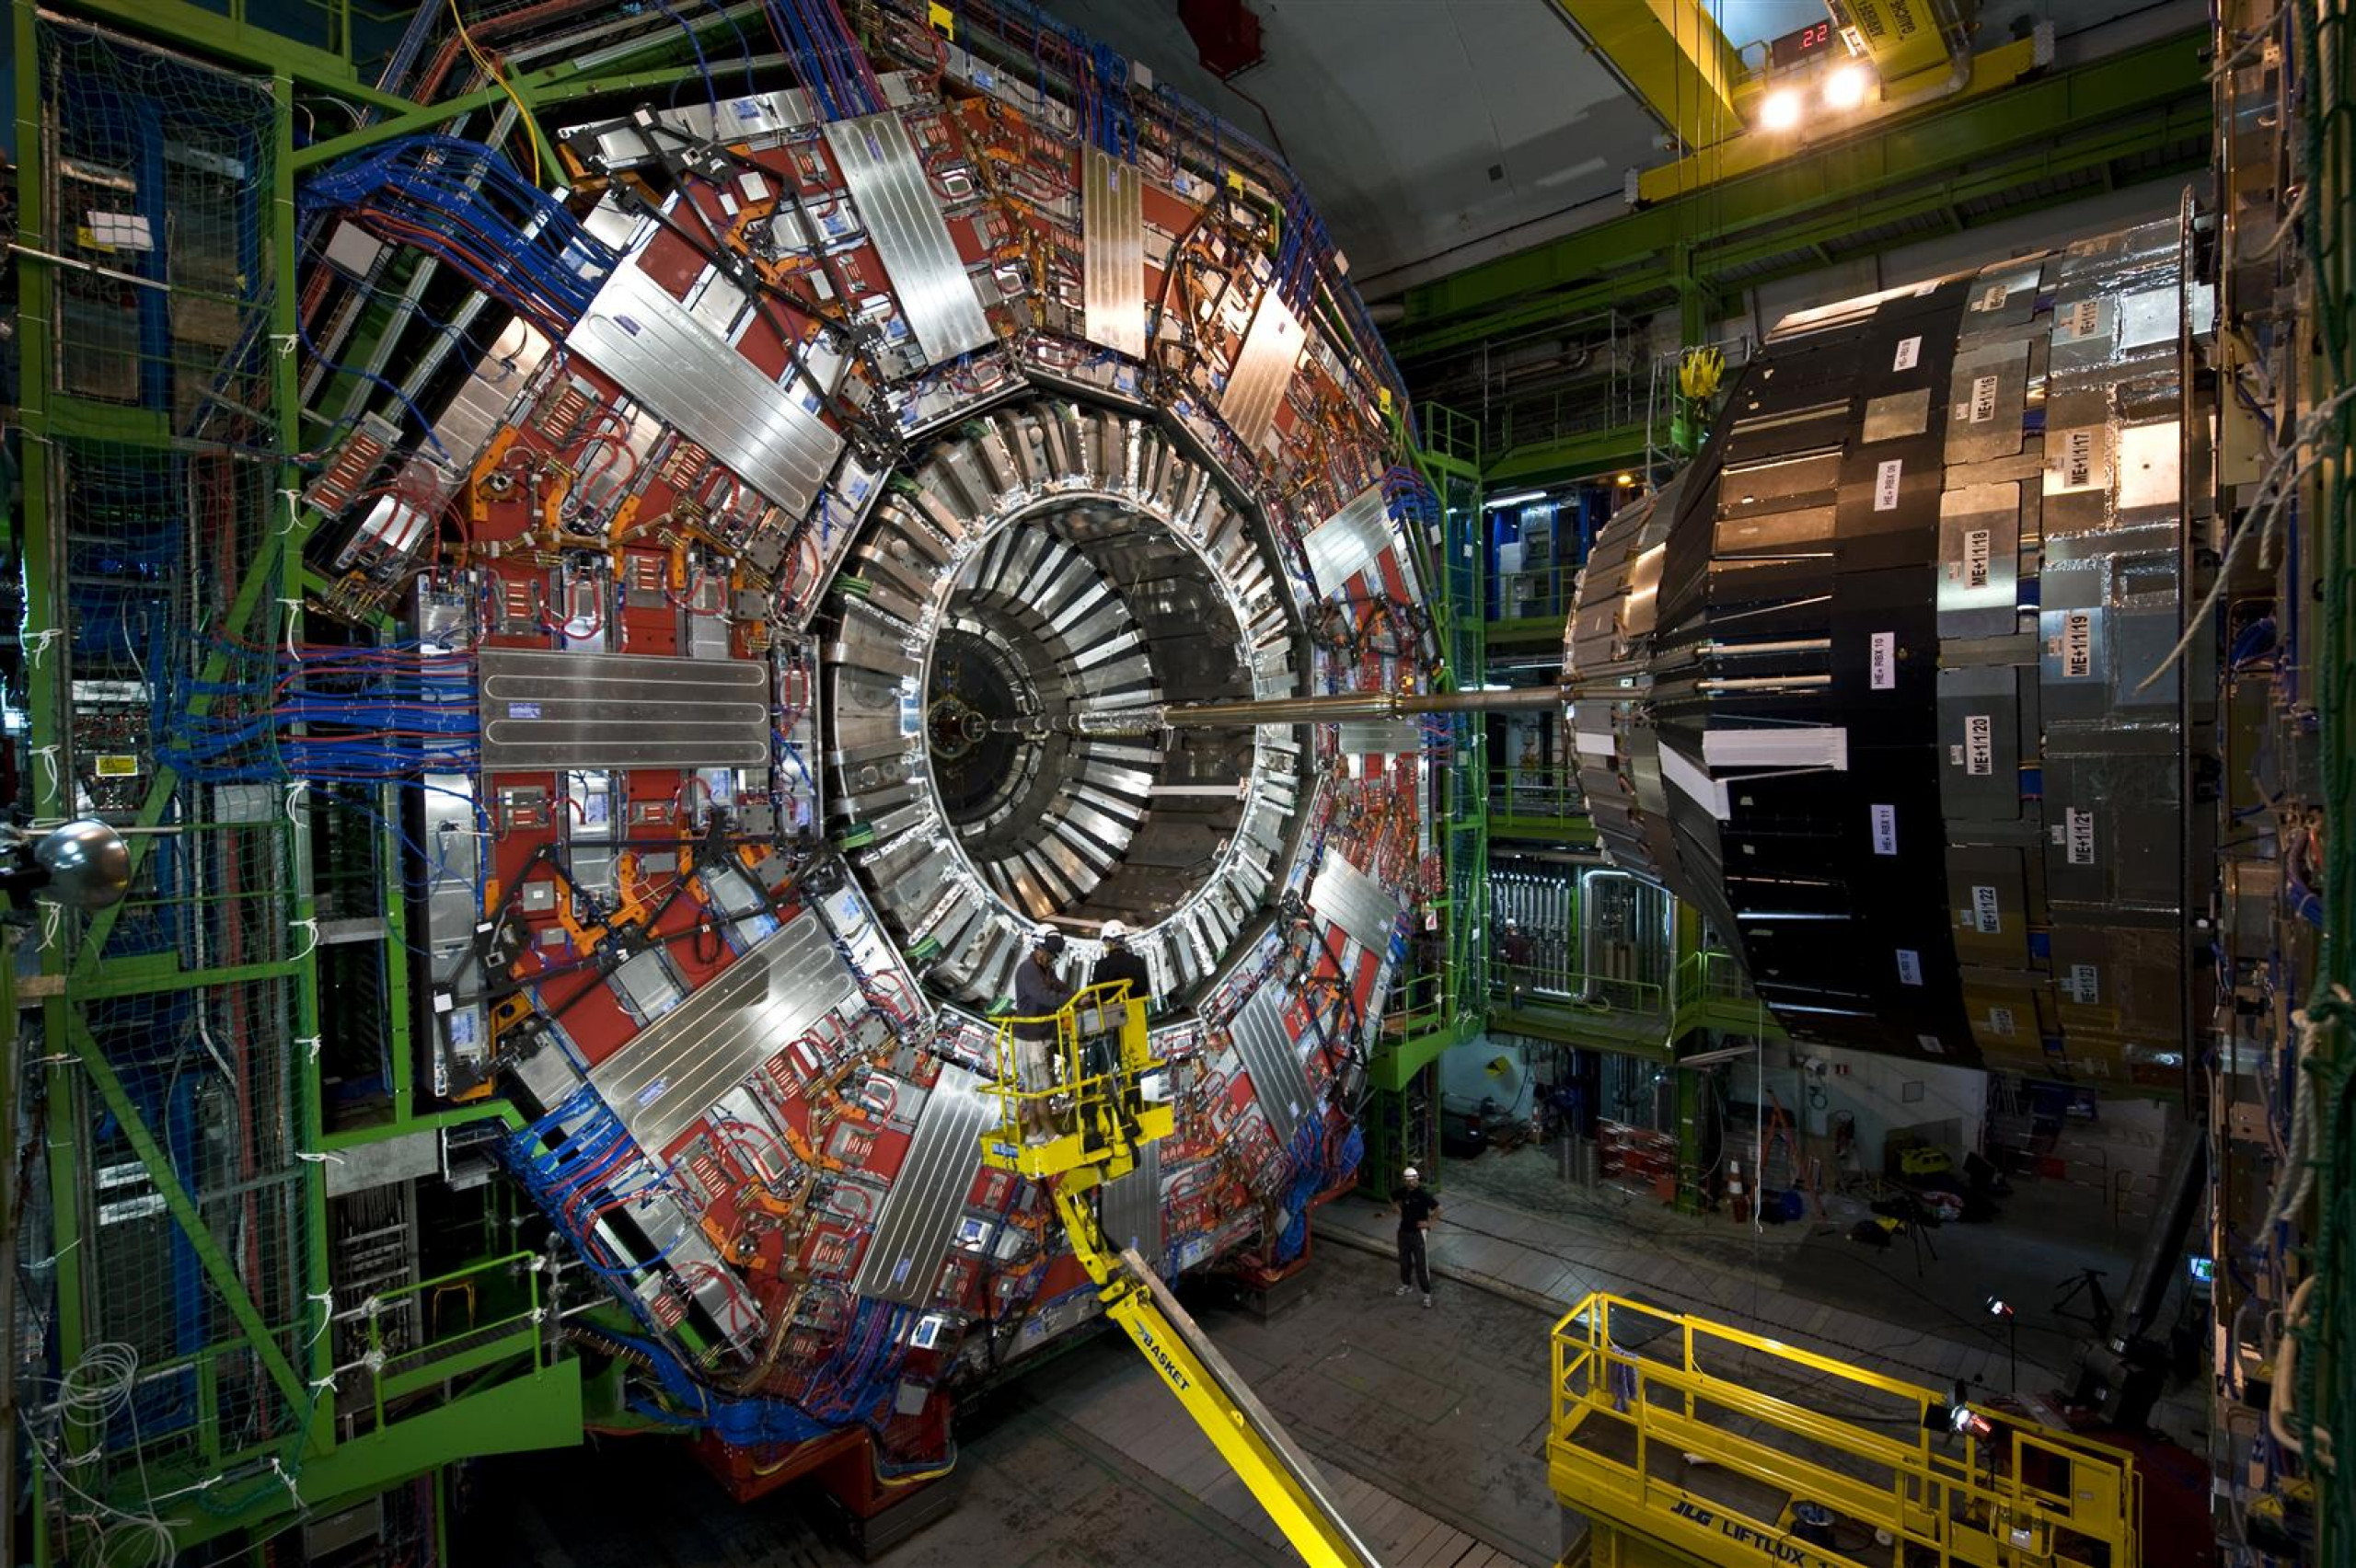 Самая большая частица. Швейцария ЦЕРН коллайдер. Адронный коллайдер ЦЕРН. Большой адронный коллайдер Atlas. Большой адронный коллайдер детекторы.